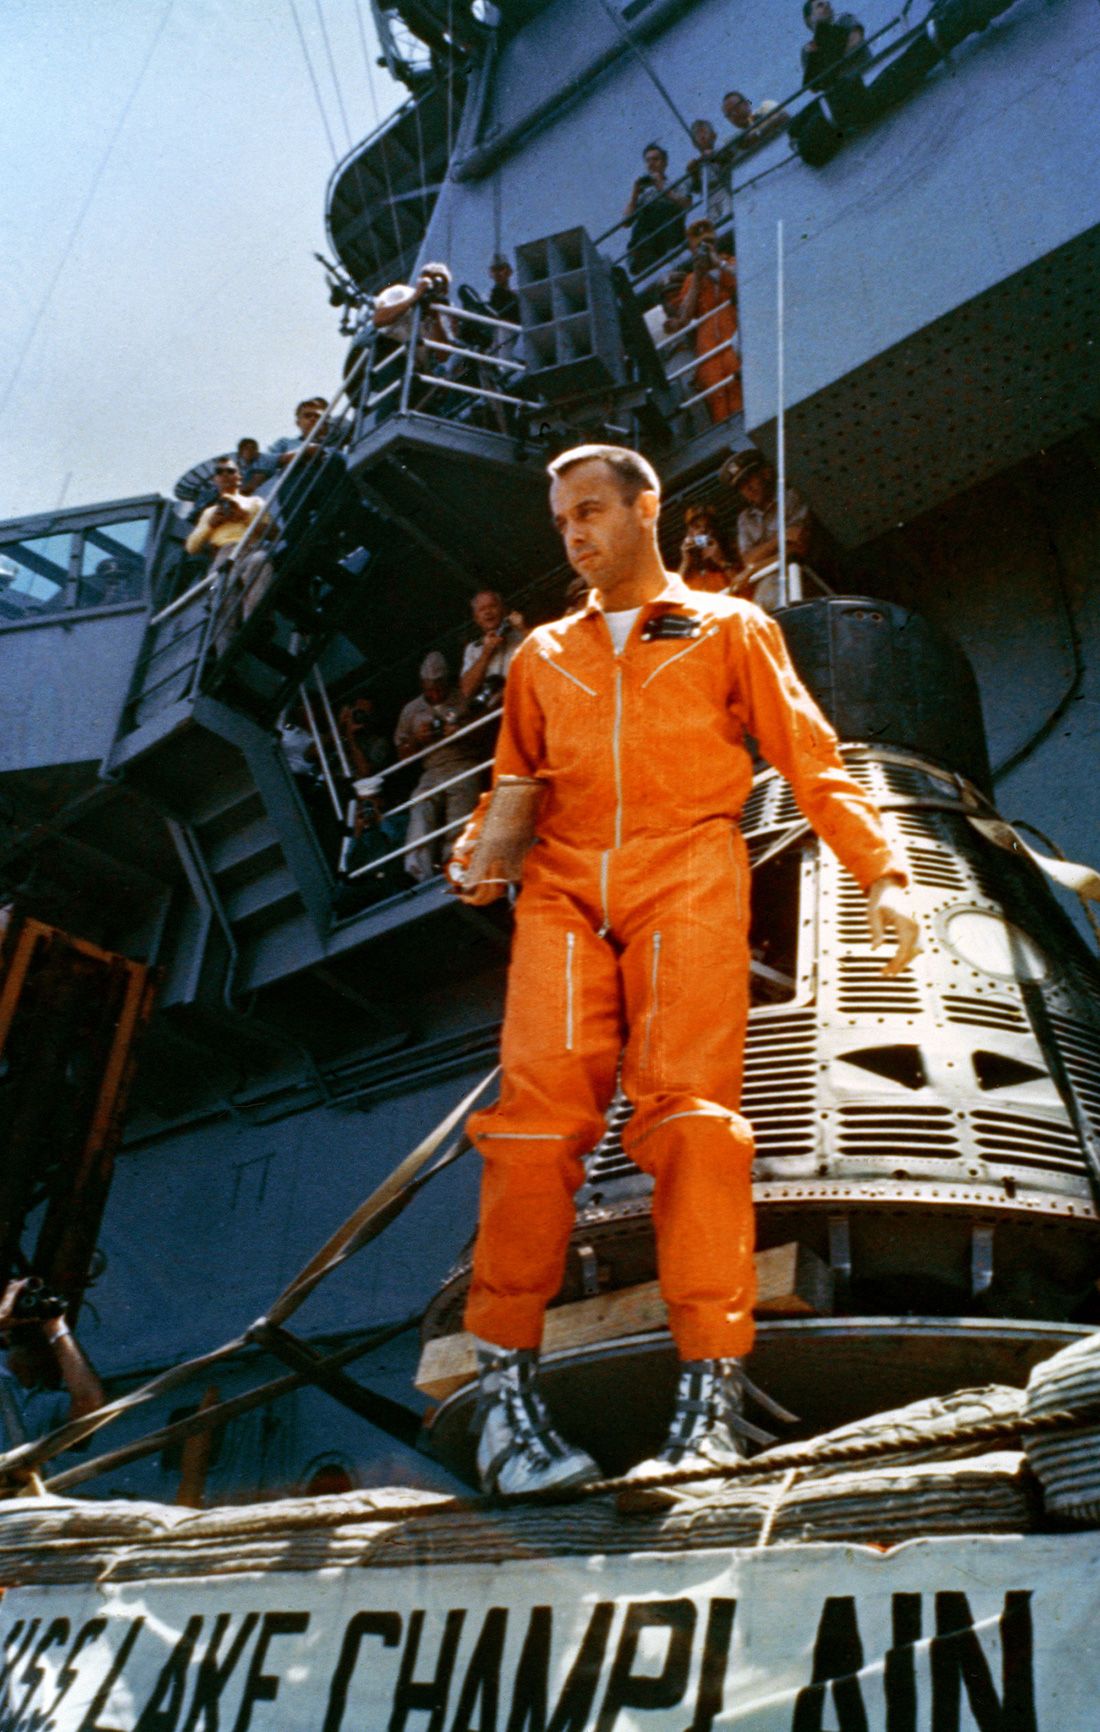 Mercury Redstone 3: Photos from Alan Shepard's Freedom 7 Spaceflight